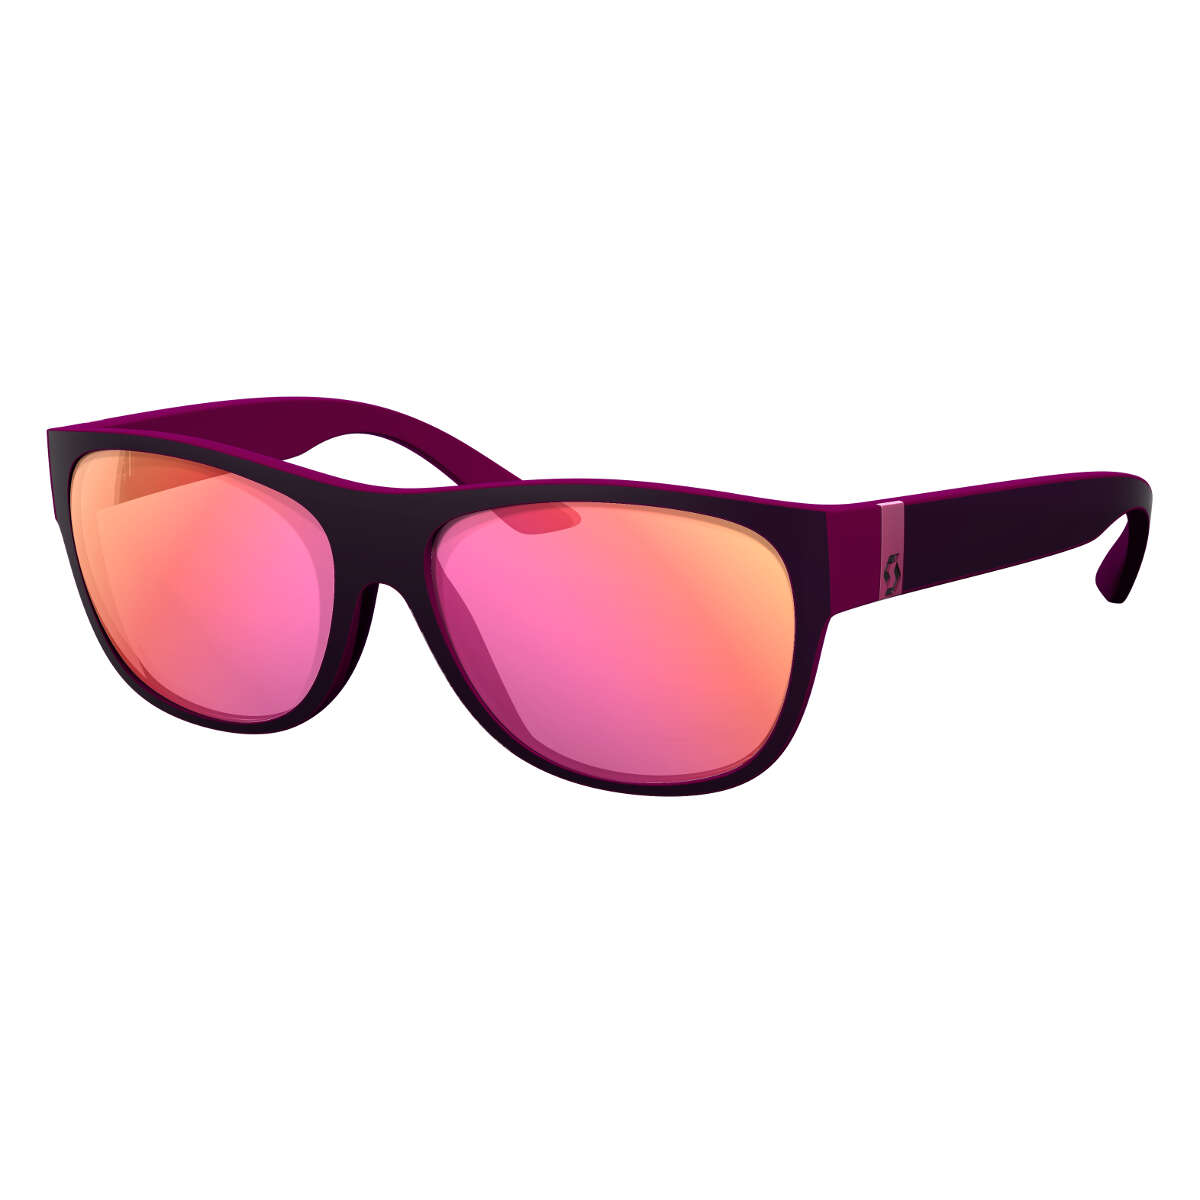 Scott Sunglasses Lyric Black/Purple - Pink Chrome